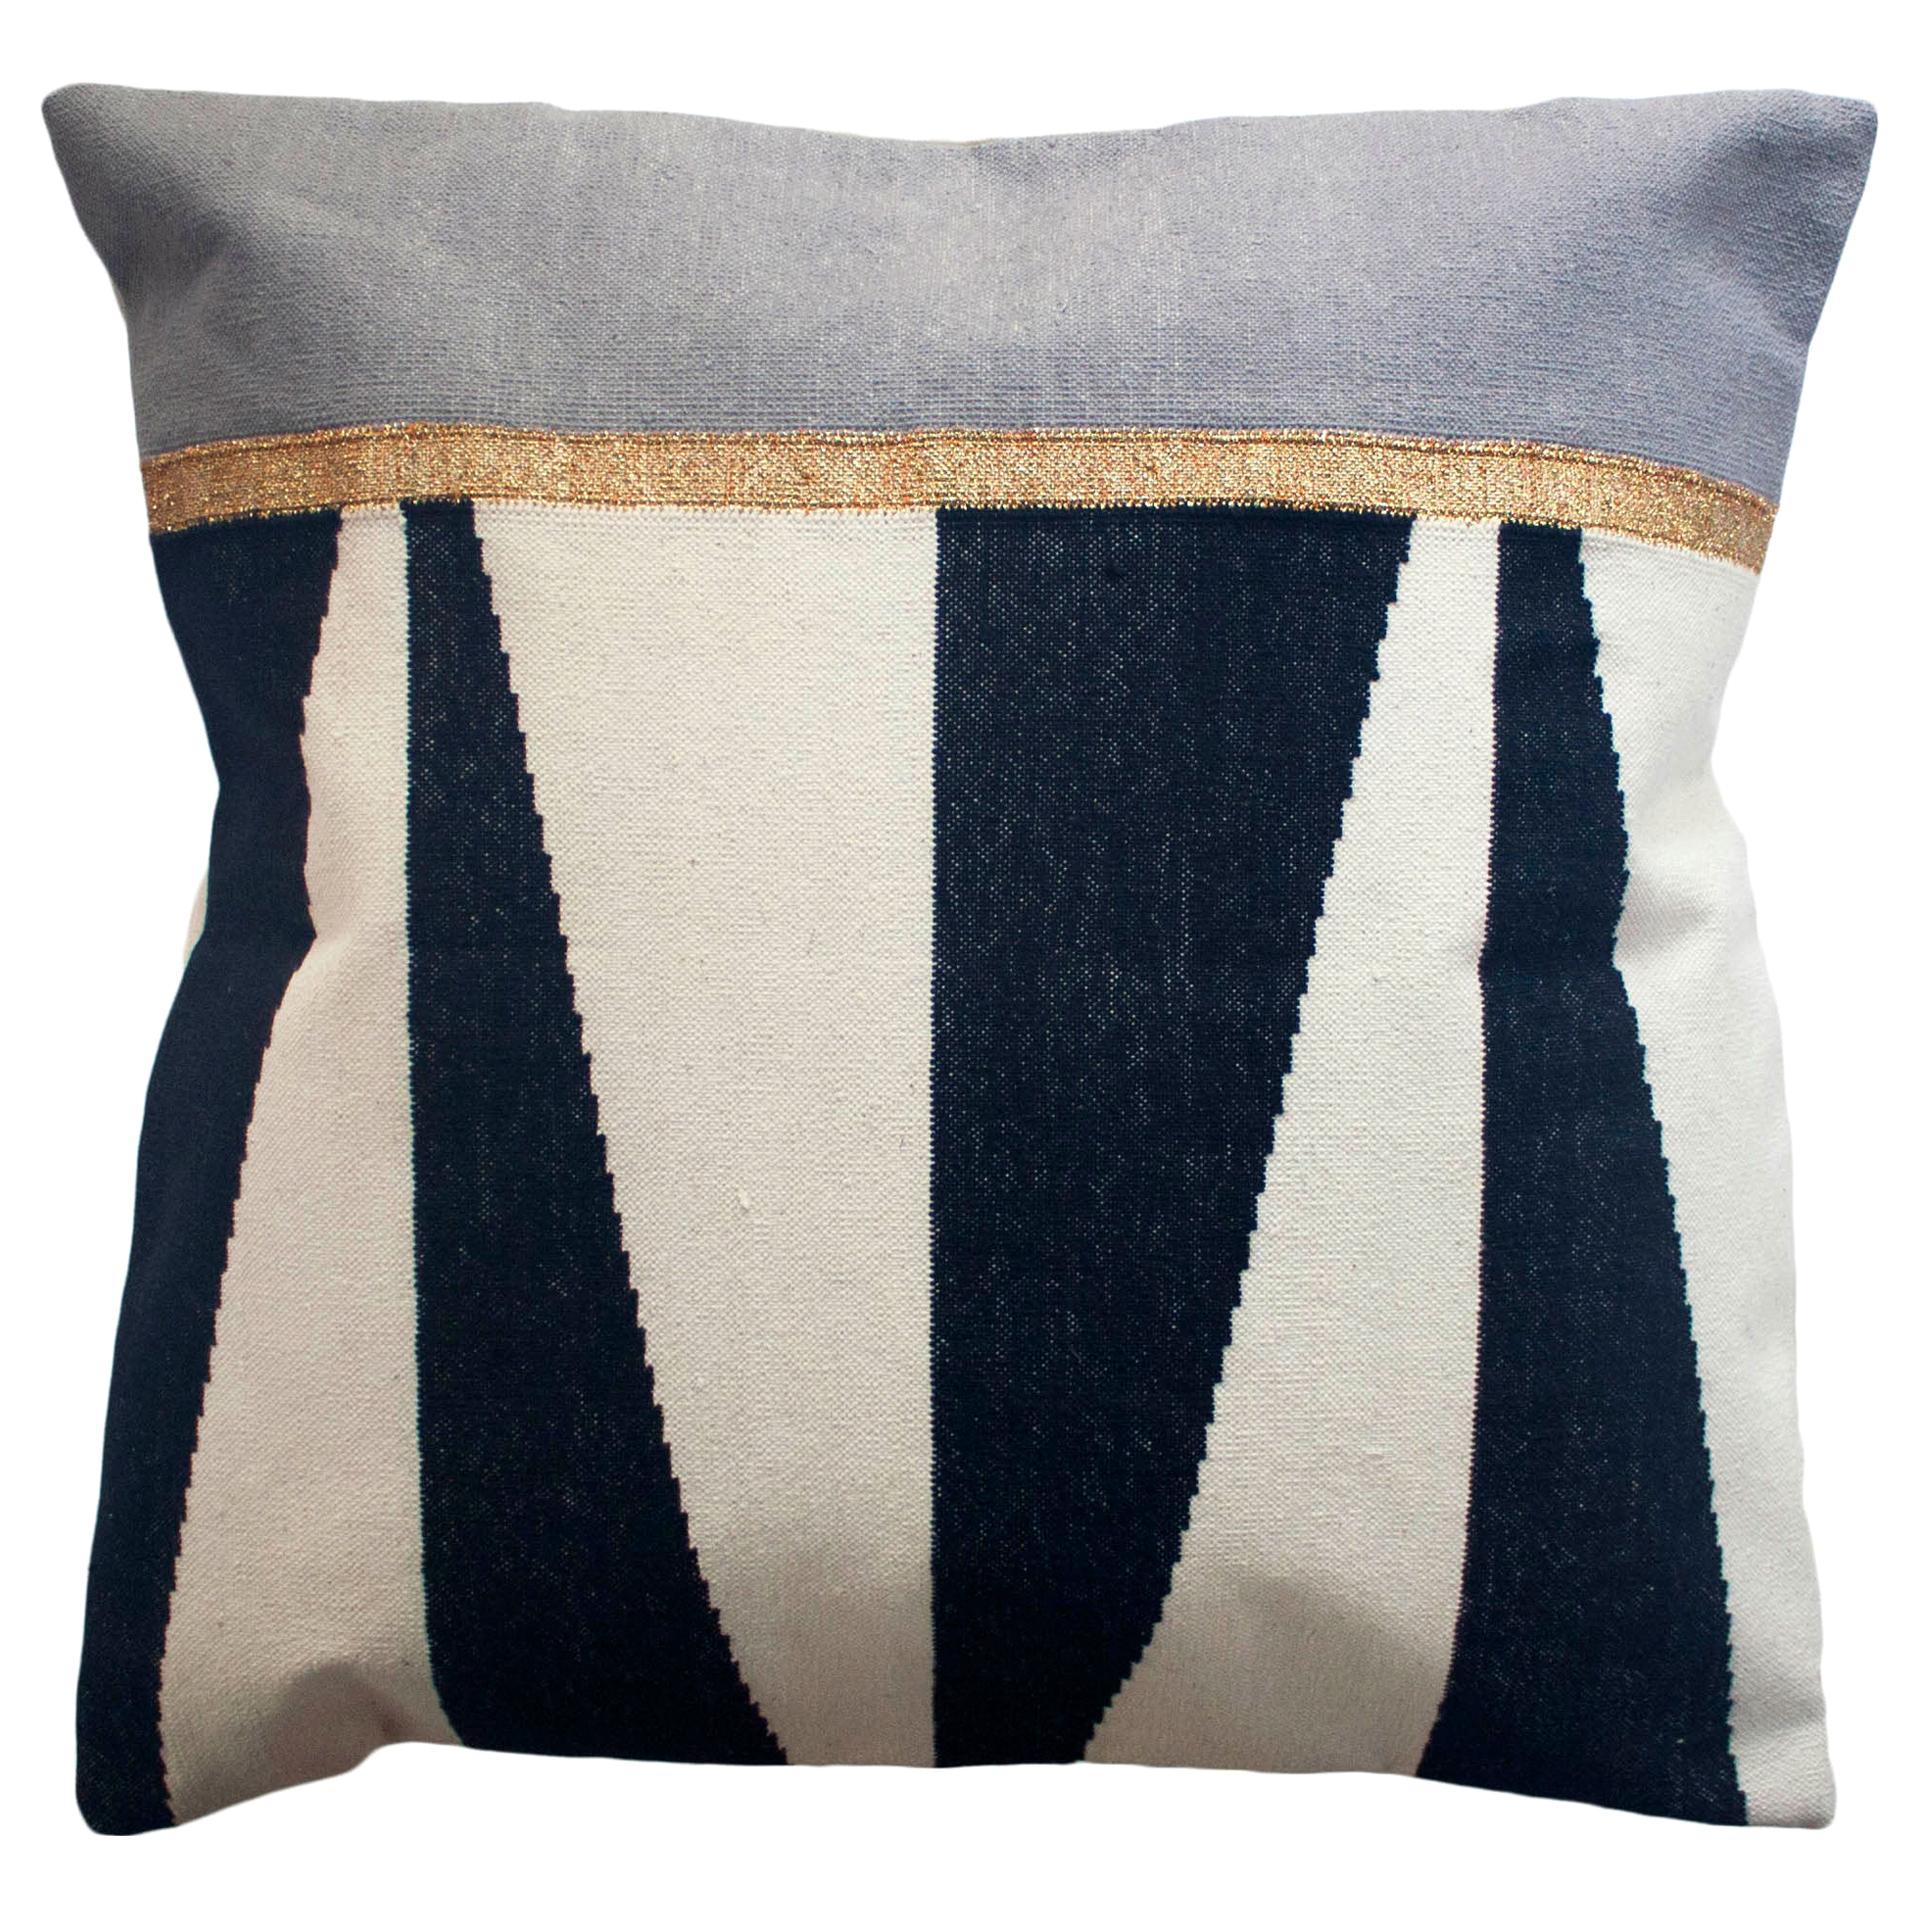 Geometric Jordan Black and White Modern Throw Pillow Cover